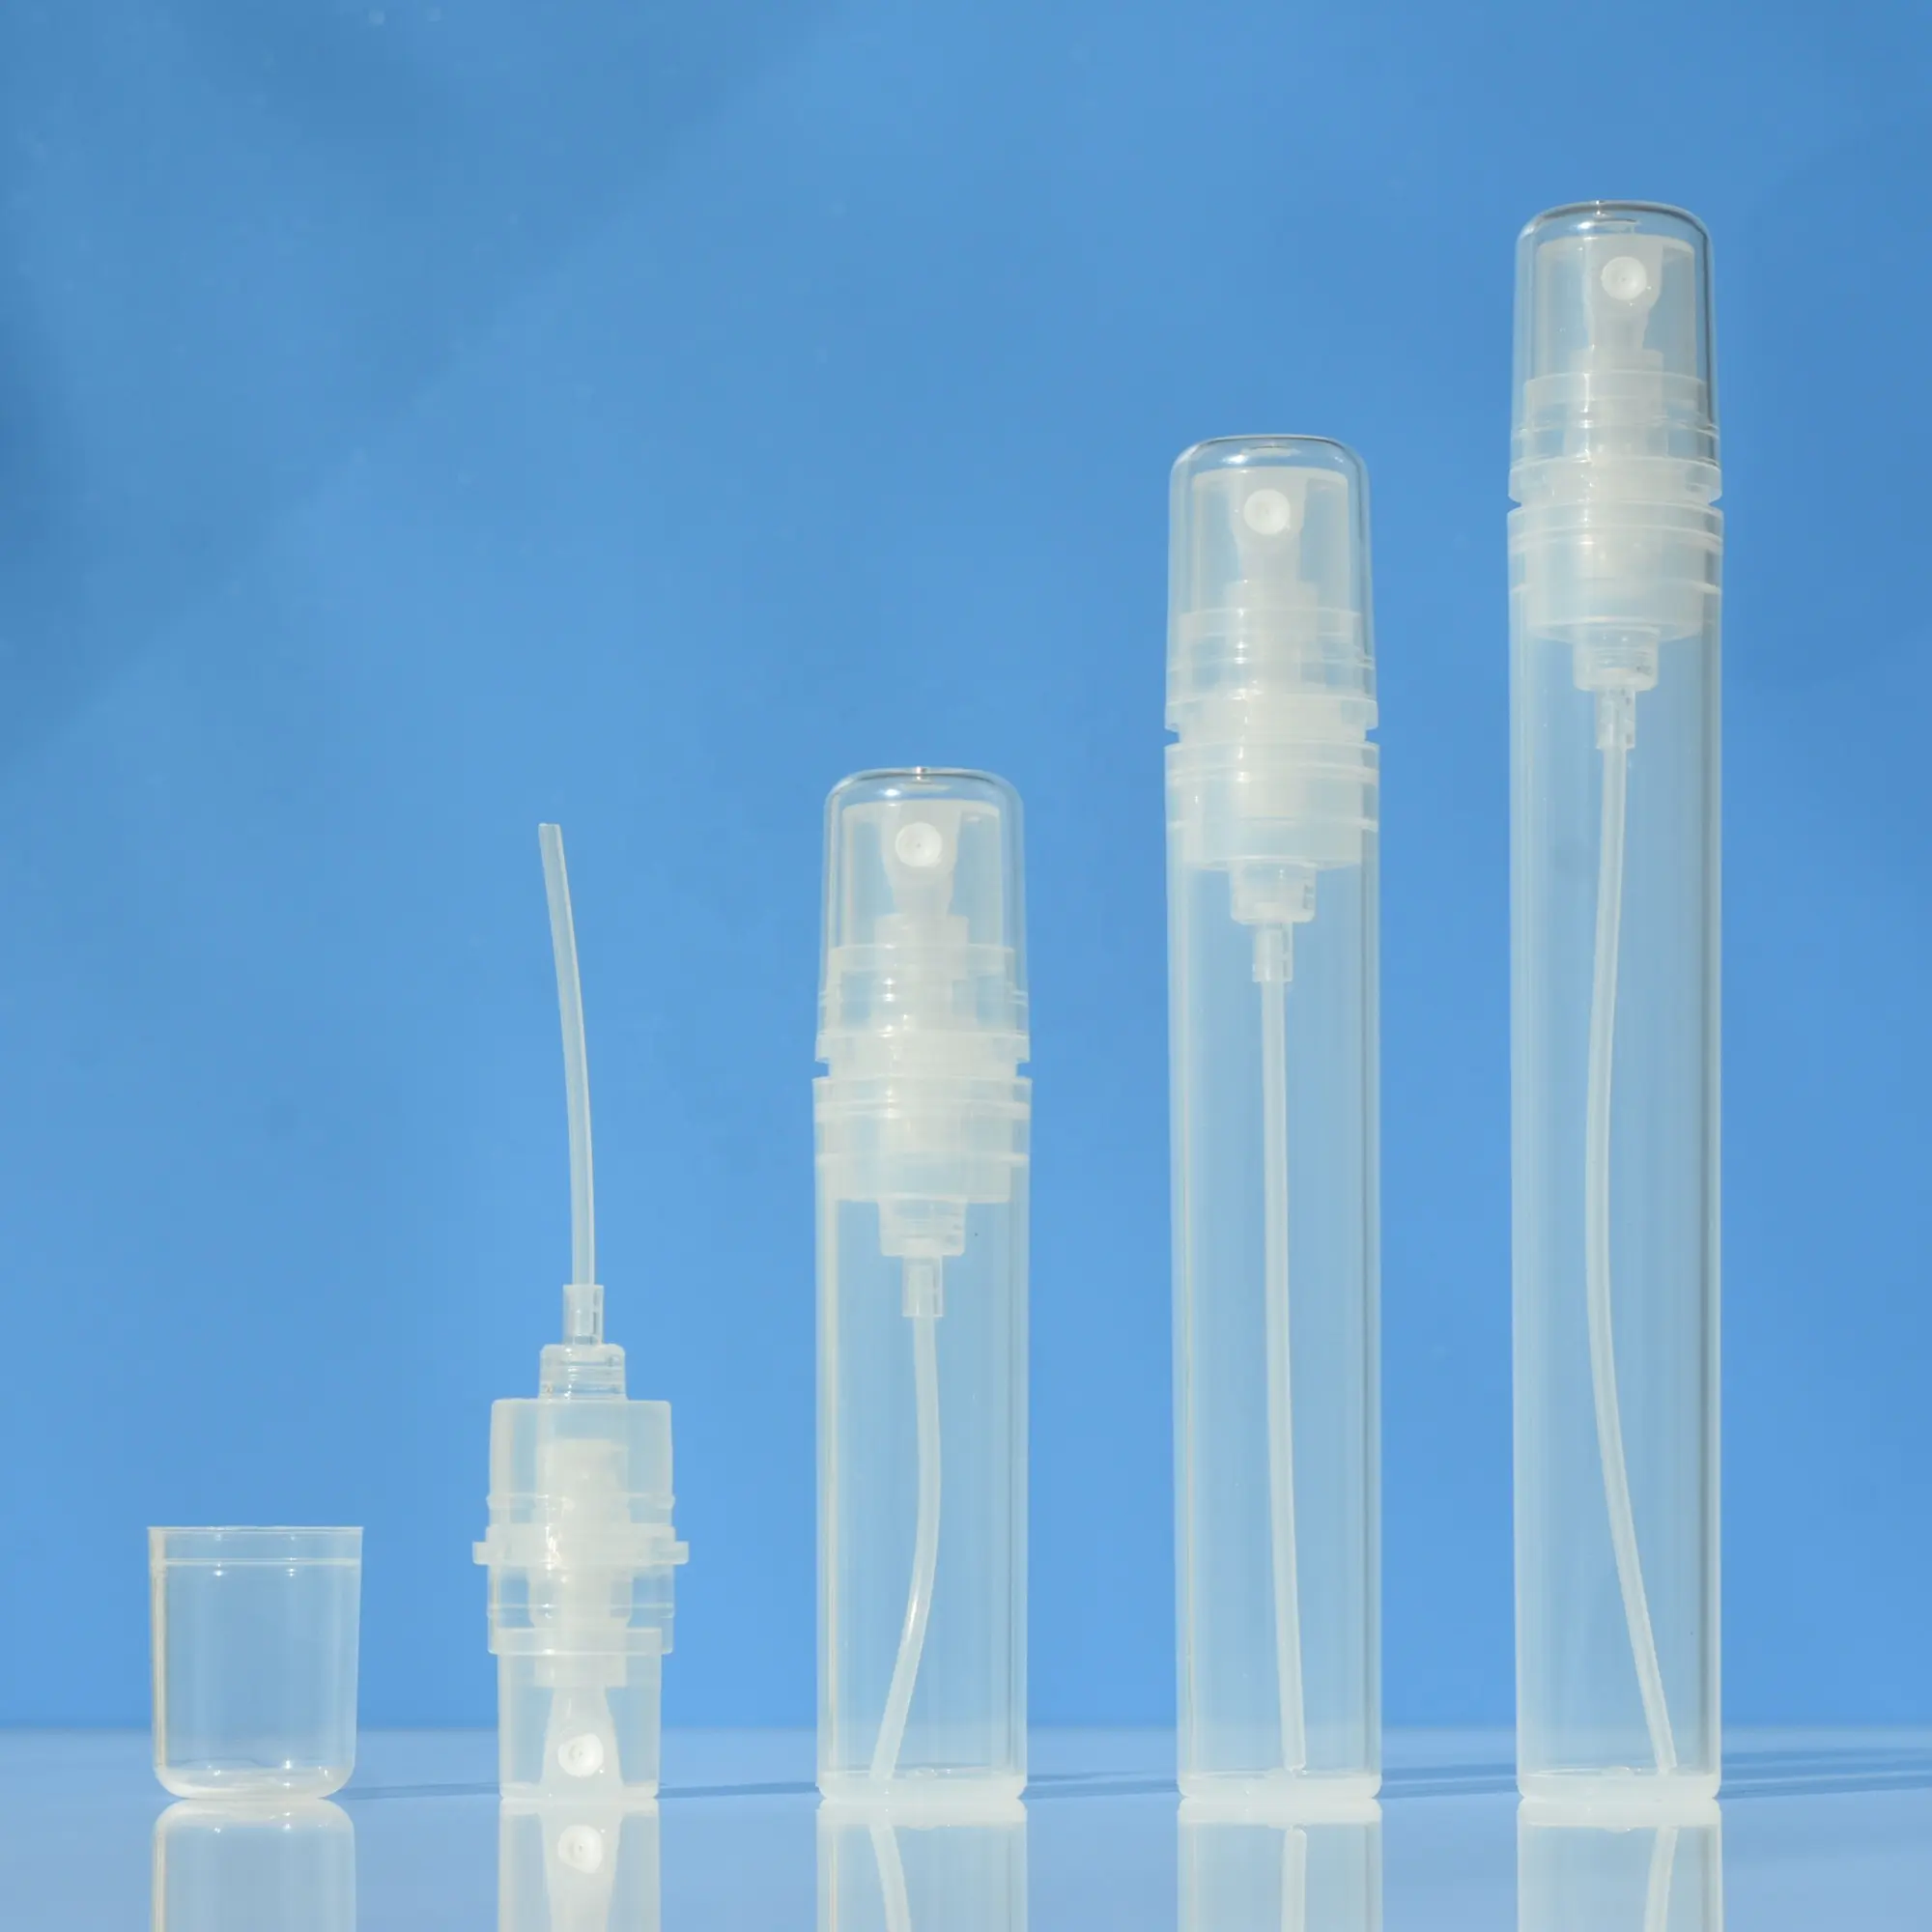 HeLun botol parfum semprot plastik, merek kustom 5ml 8ml 10ml daur ulang ramah lingkungan leher PP